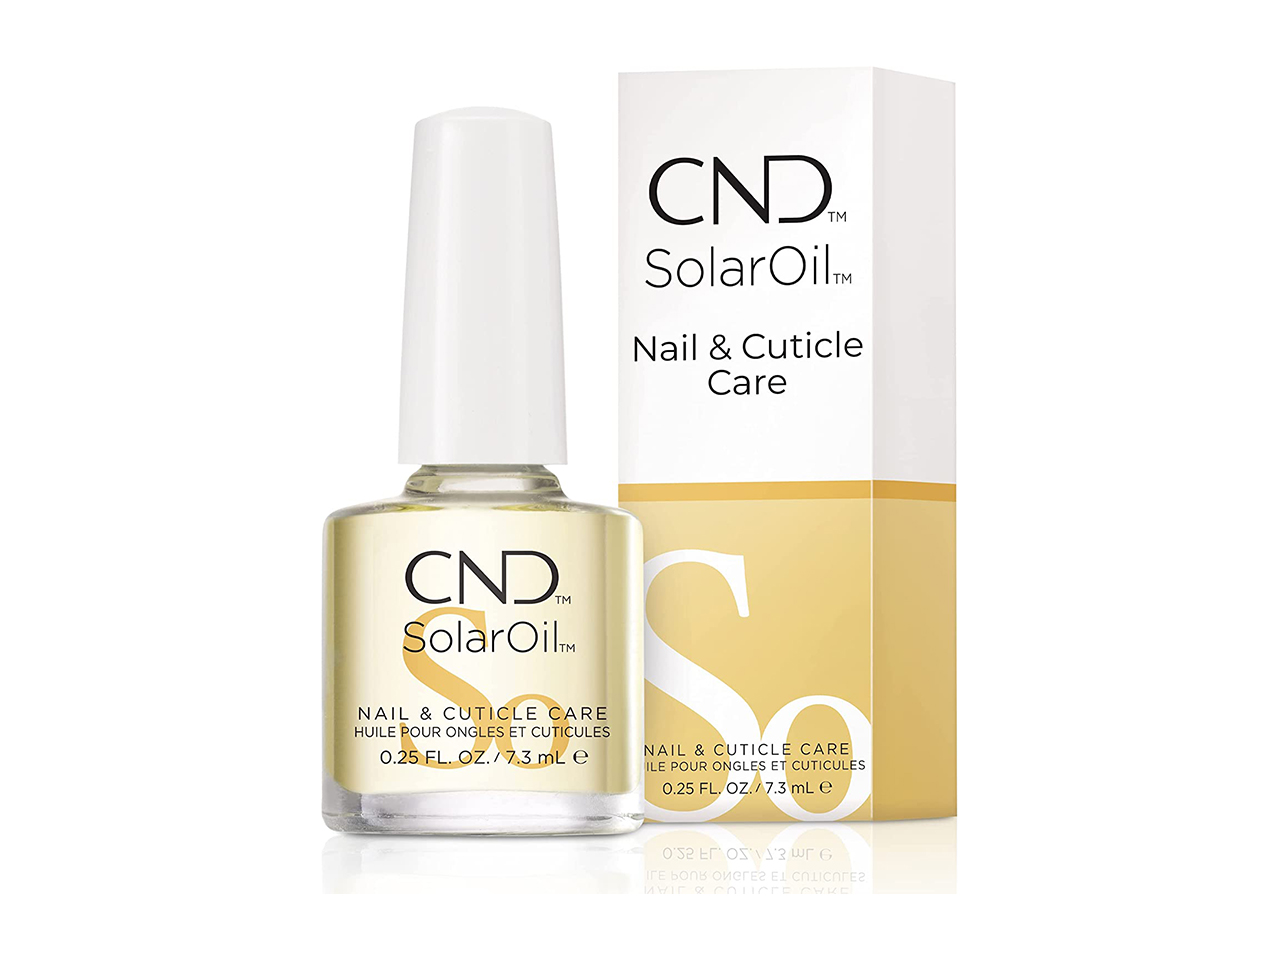 CND SolarOil Nail & Cuticle Care, at-home pedicure